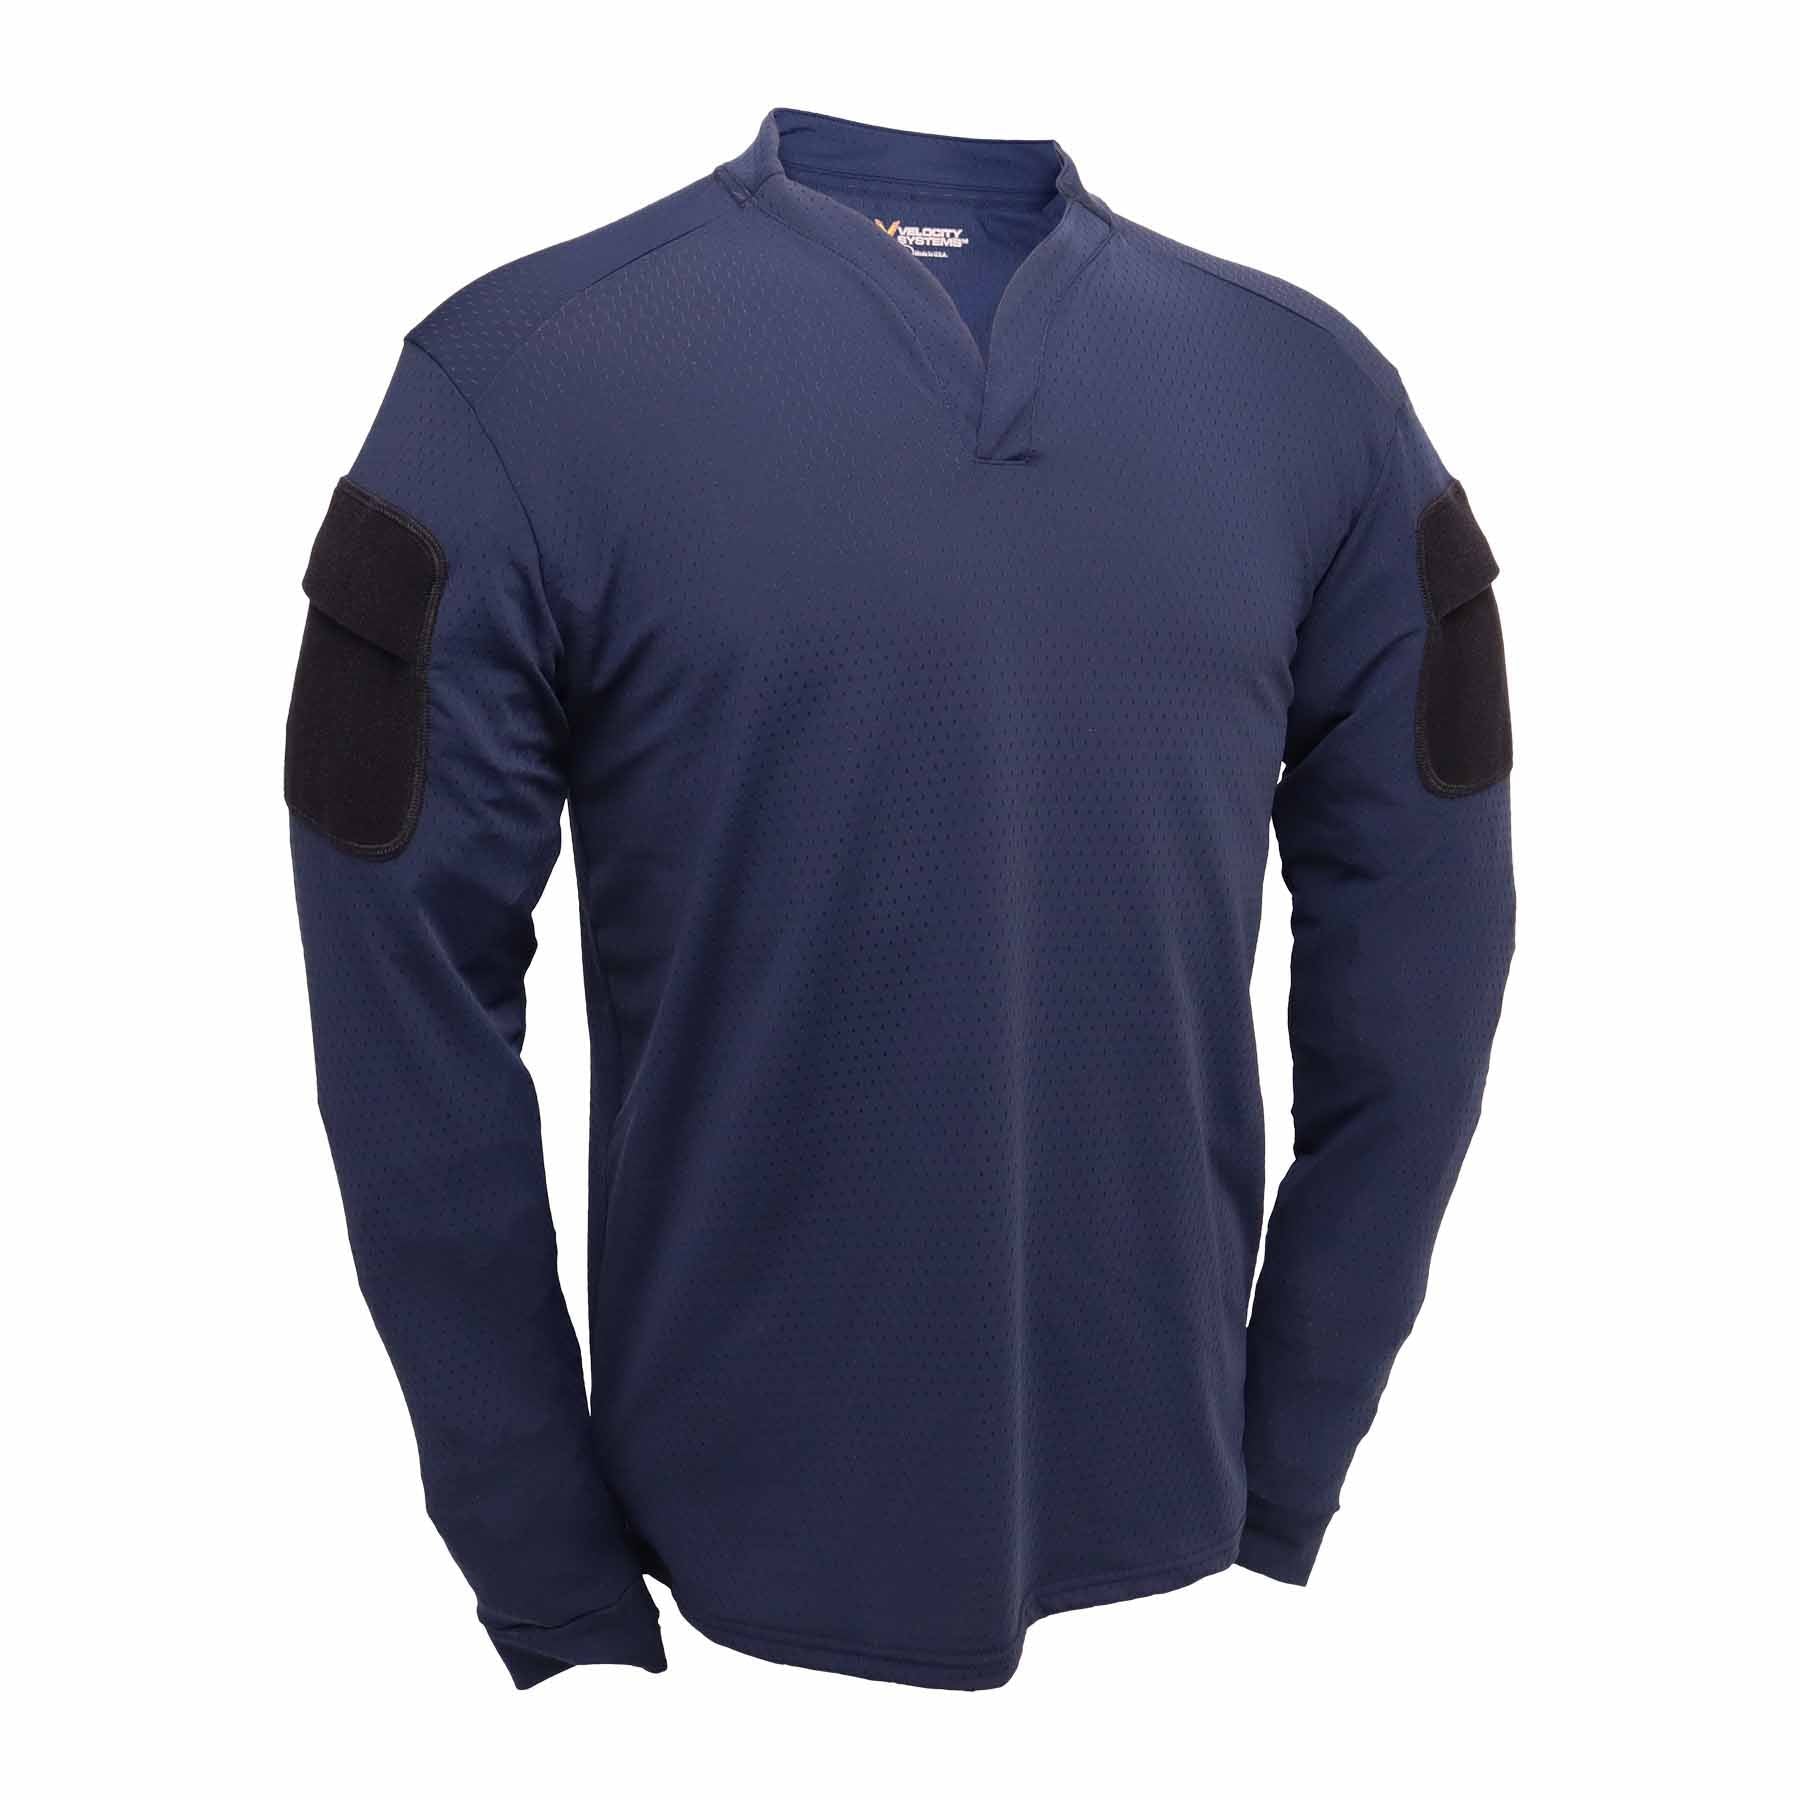 NEW Velocity Systems BOSS Rugby Sleeve LS Combat Shirt w/ Pockets VS-BRLS eBay